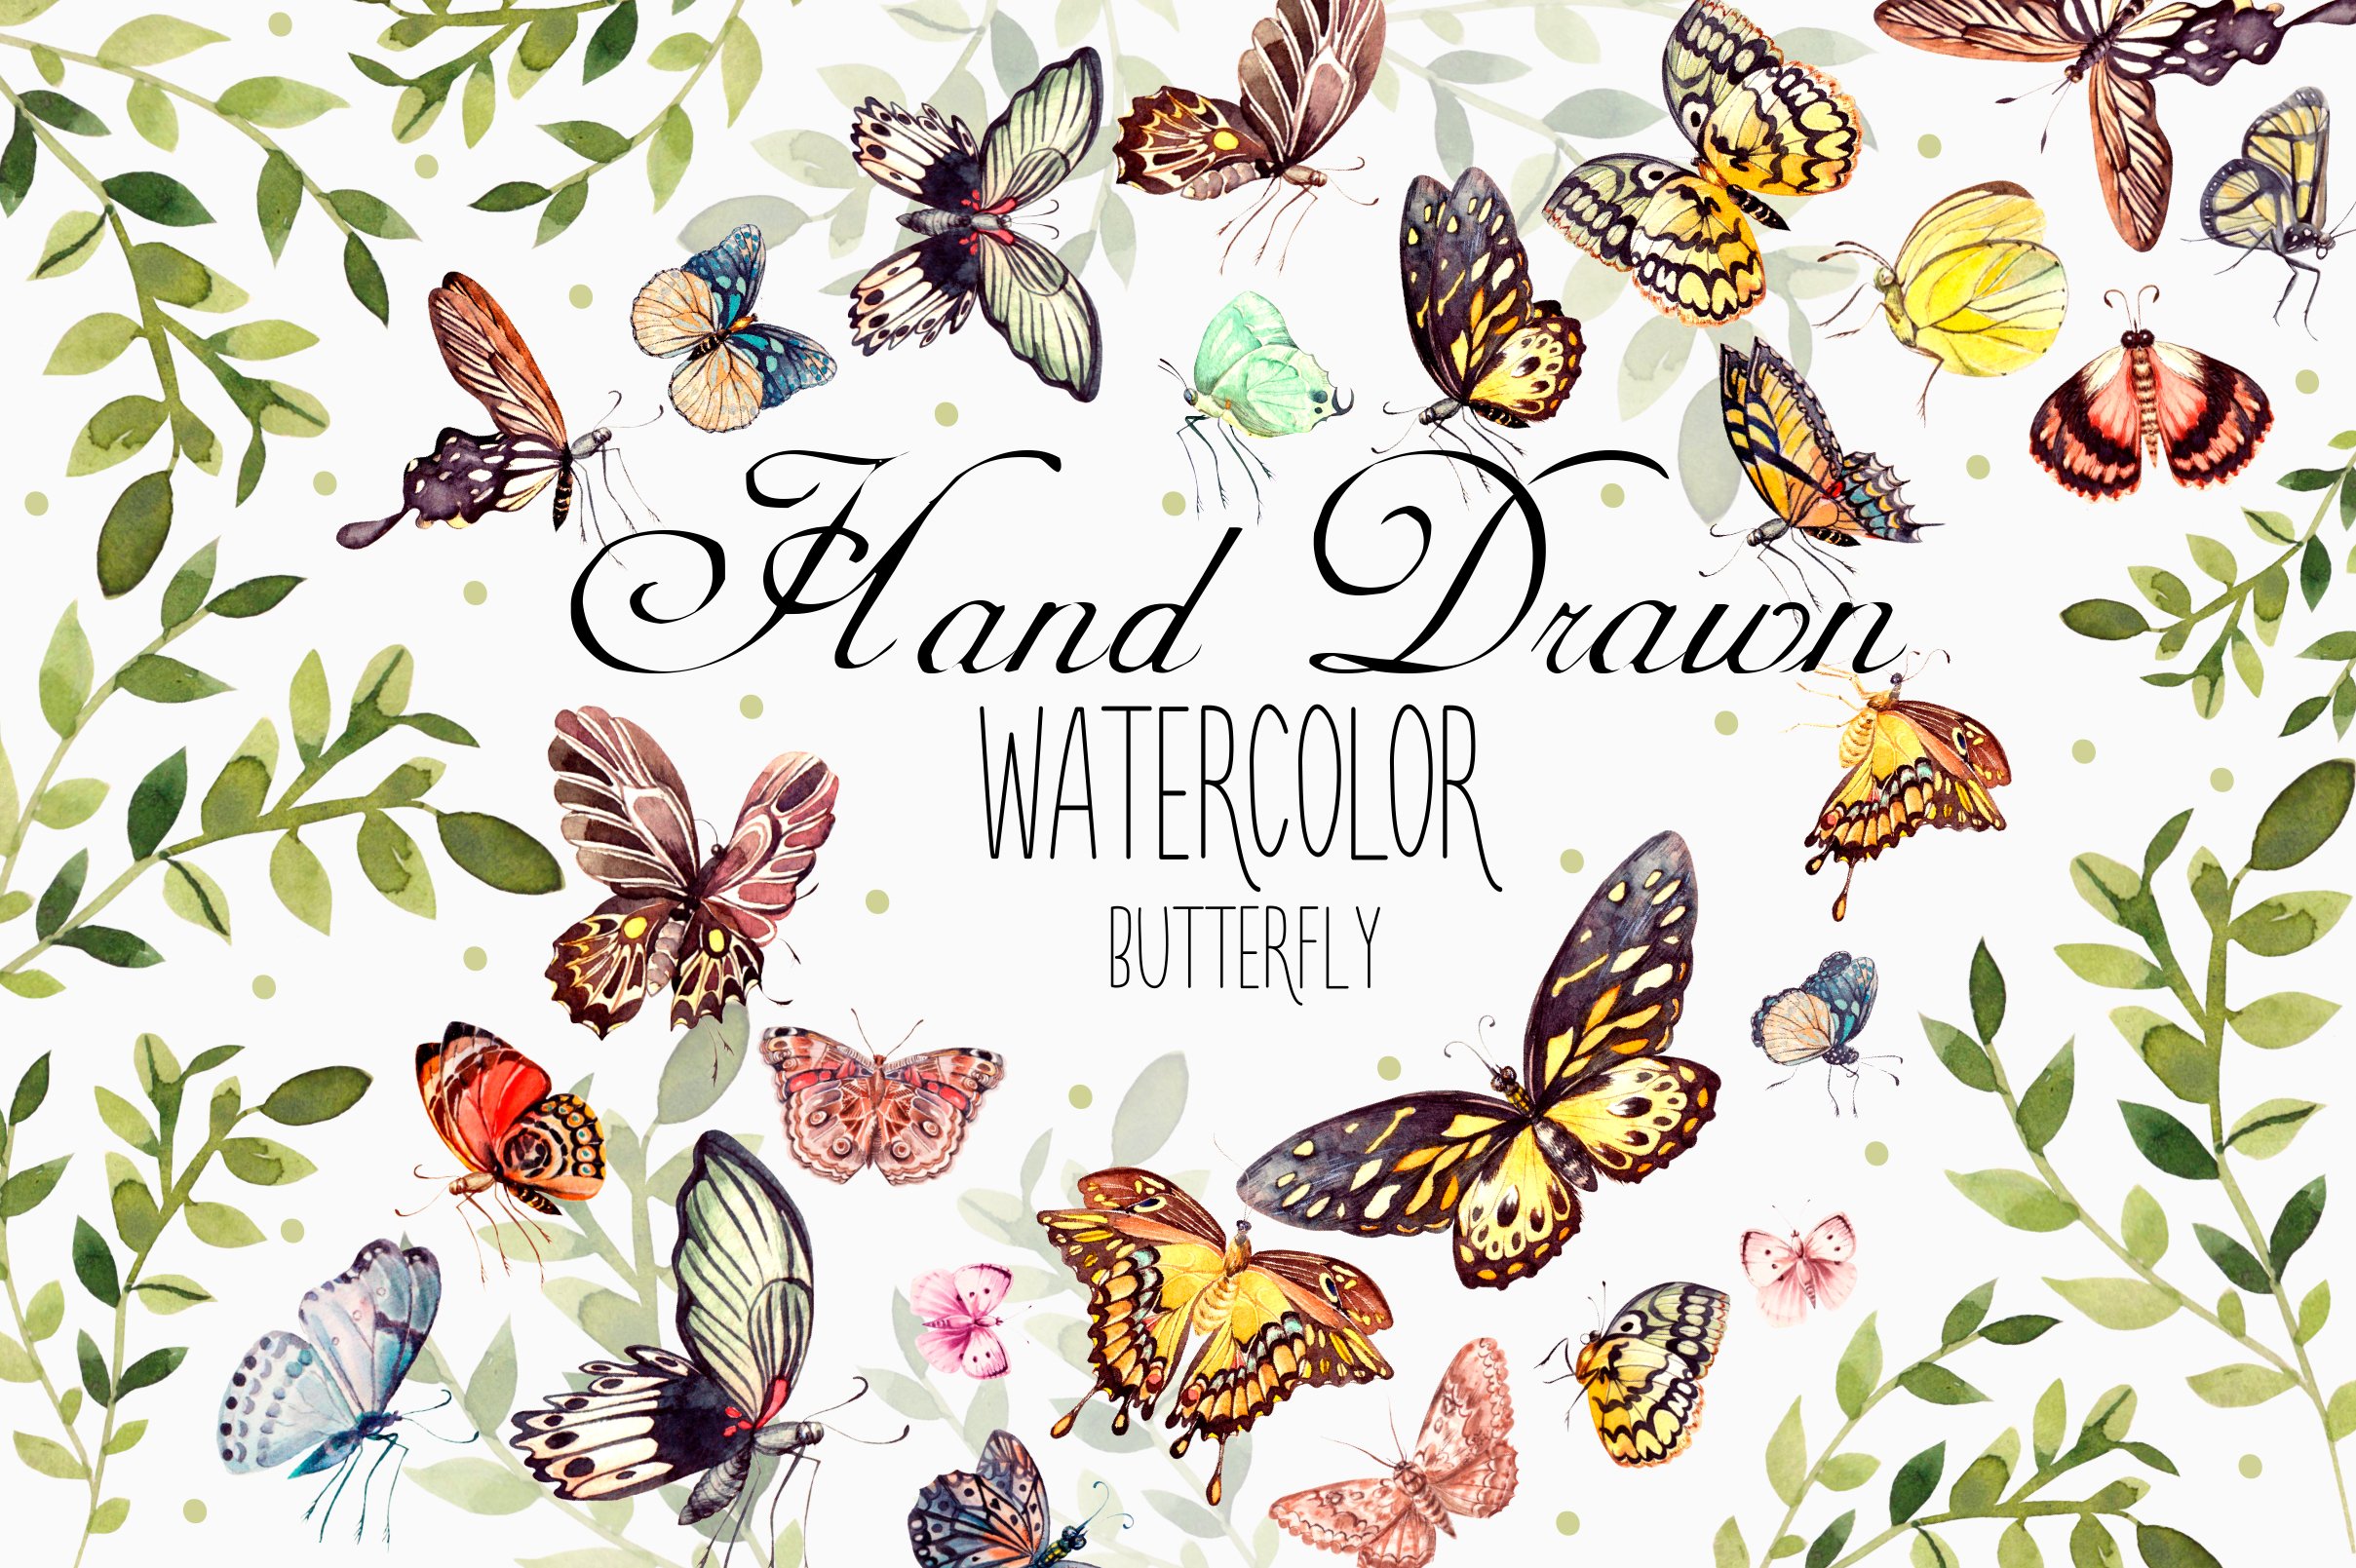 Beautiful watercolor butterflies cover image.